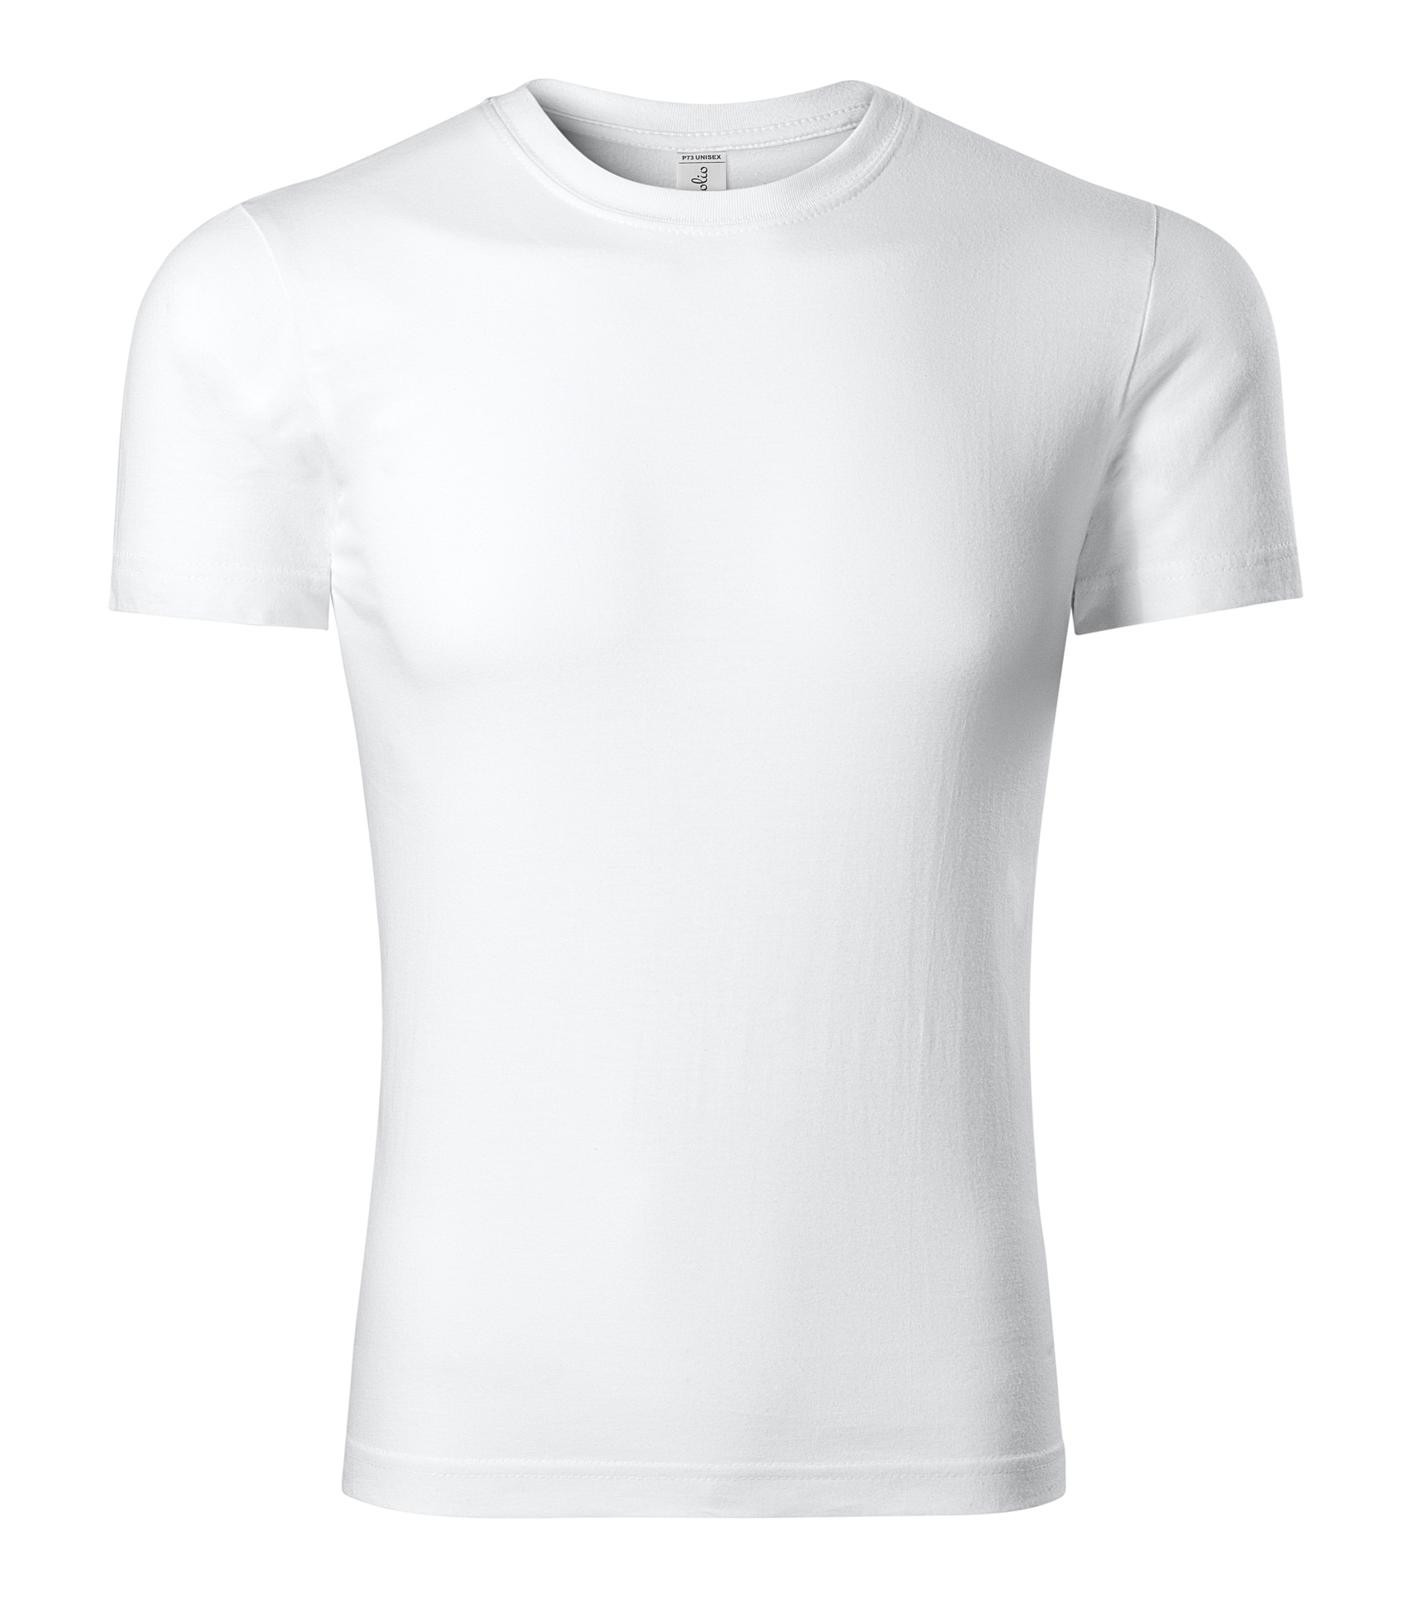 Unisex tričko Piccolio Paint P73 - veľkosť: L, farba: biela